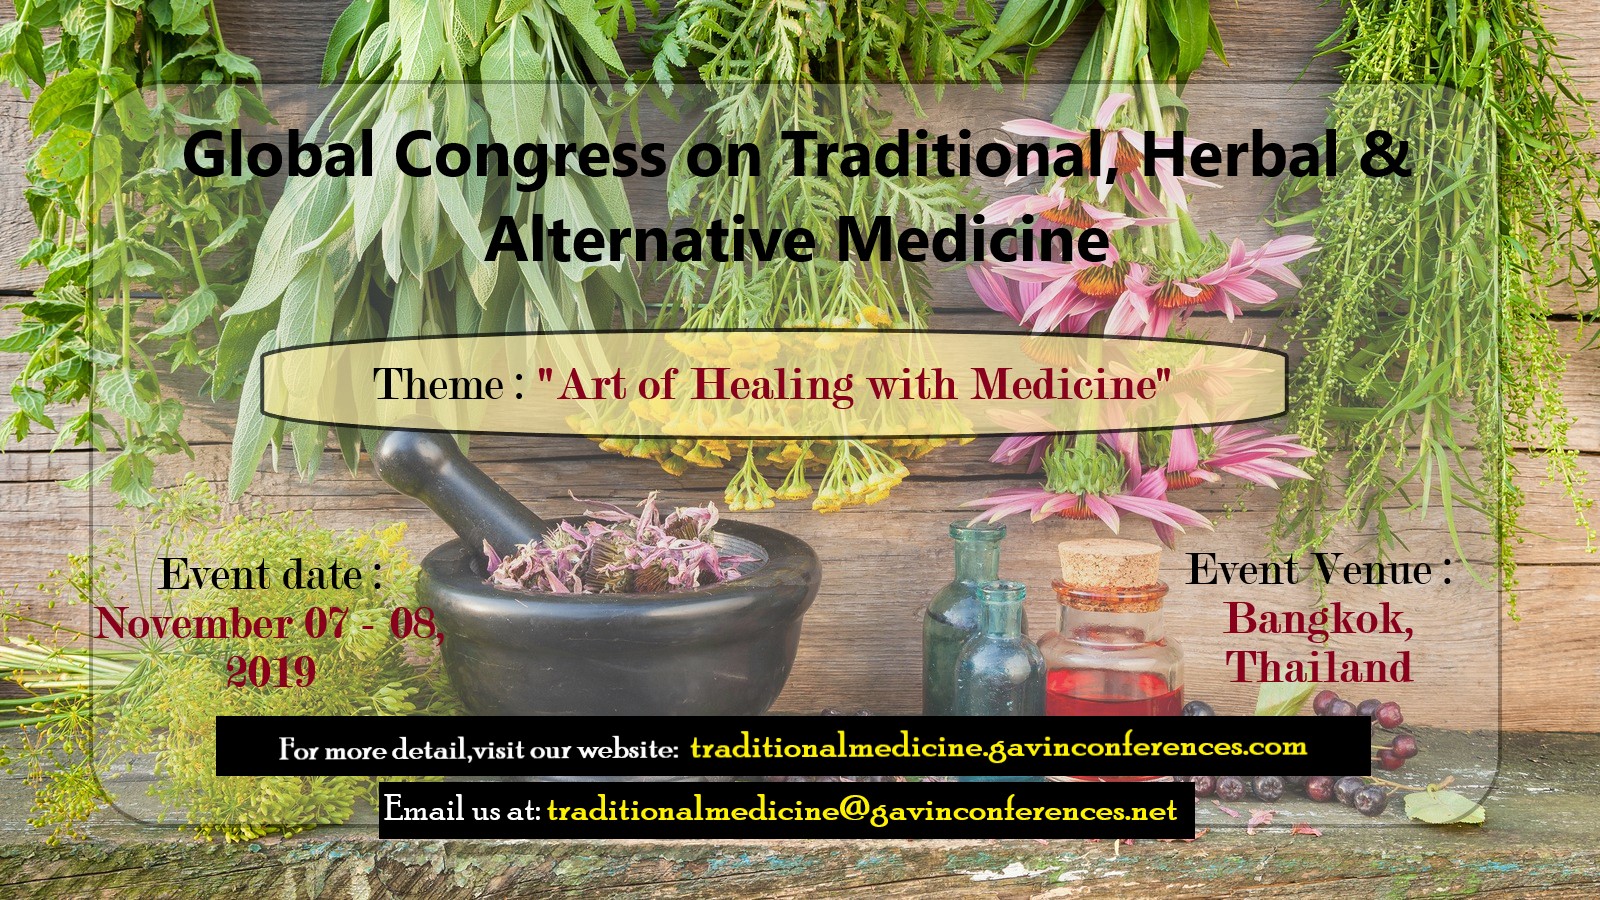 Global Congress on Traditional, Herbal & Alternative Medicine